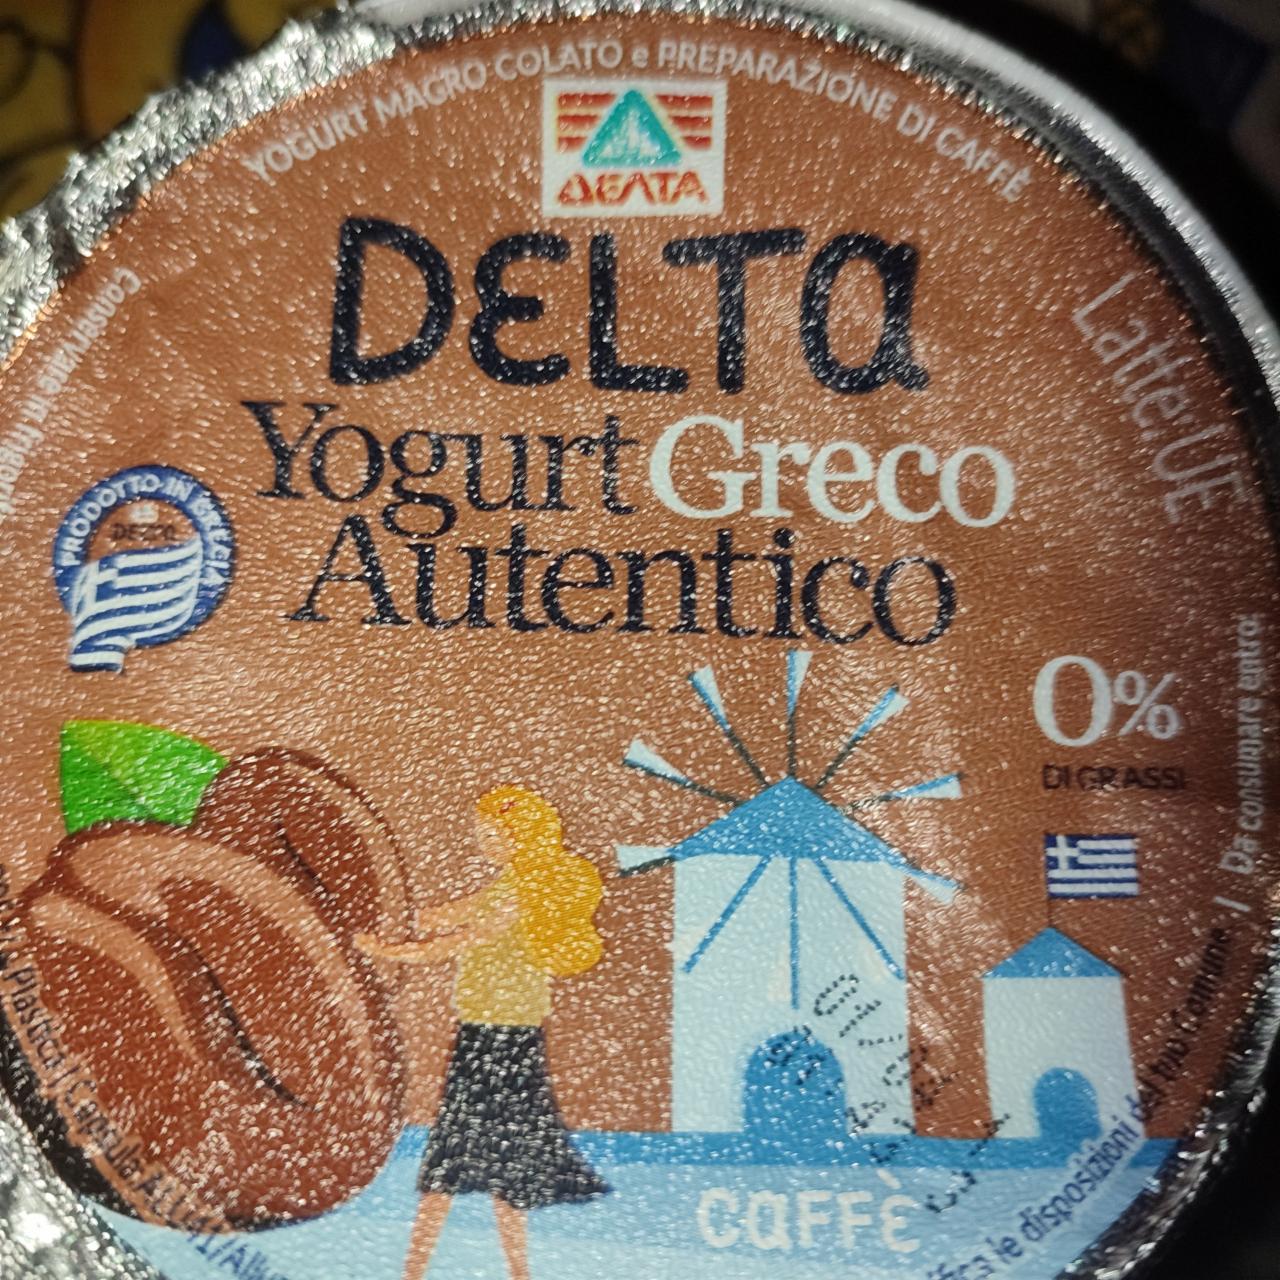 Фото - Yogurt Greco Autentico 0% grasi Delta